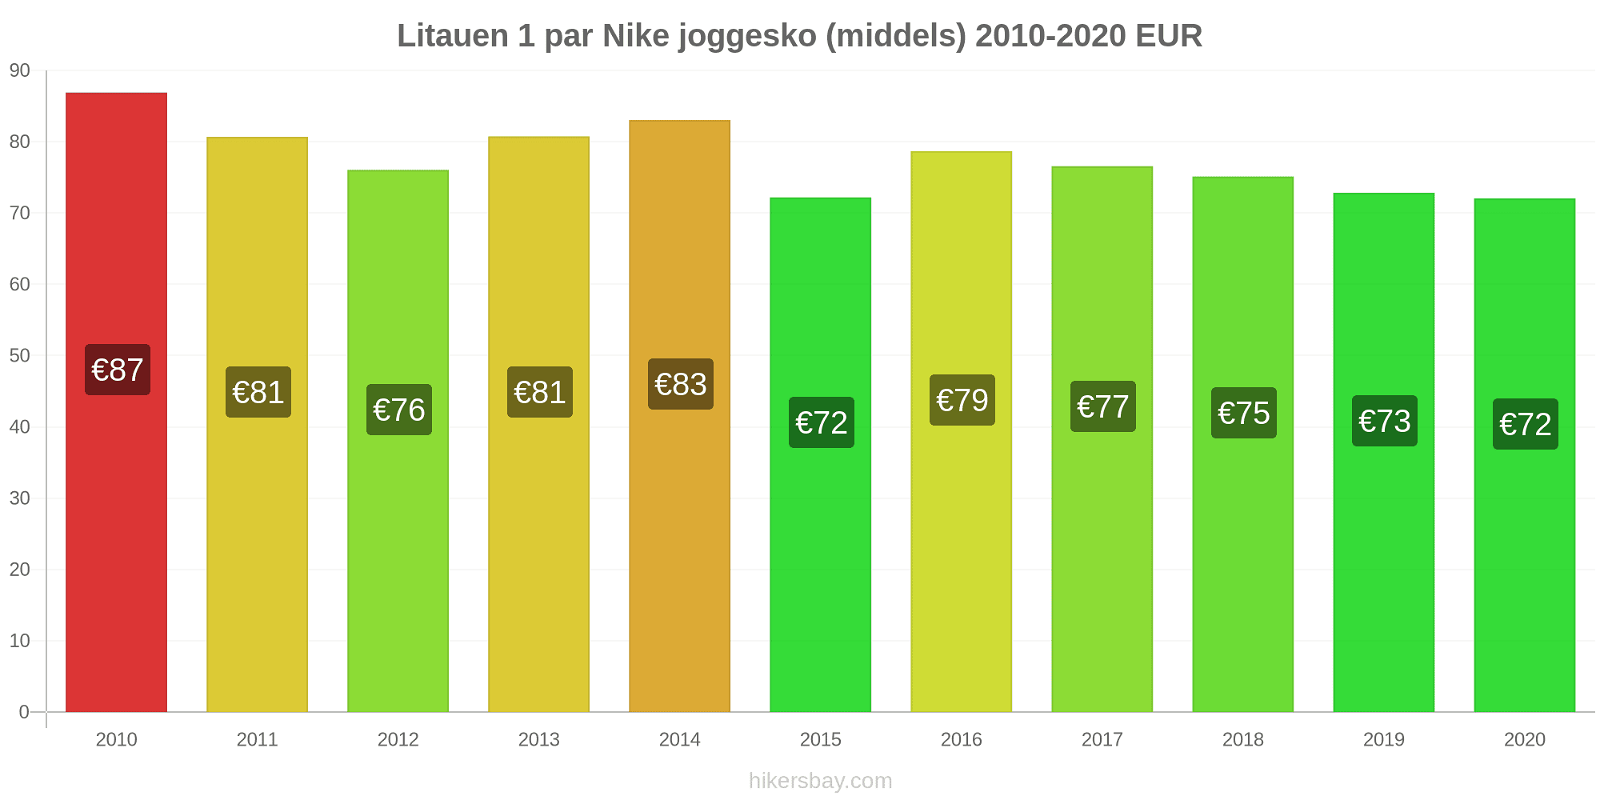 Litauen prisendringer 1 par Nike joggesko (middels) hikersbay.com